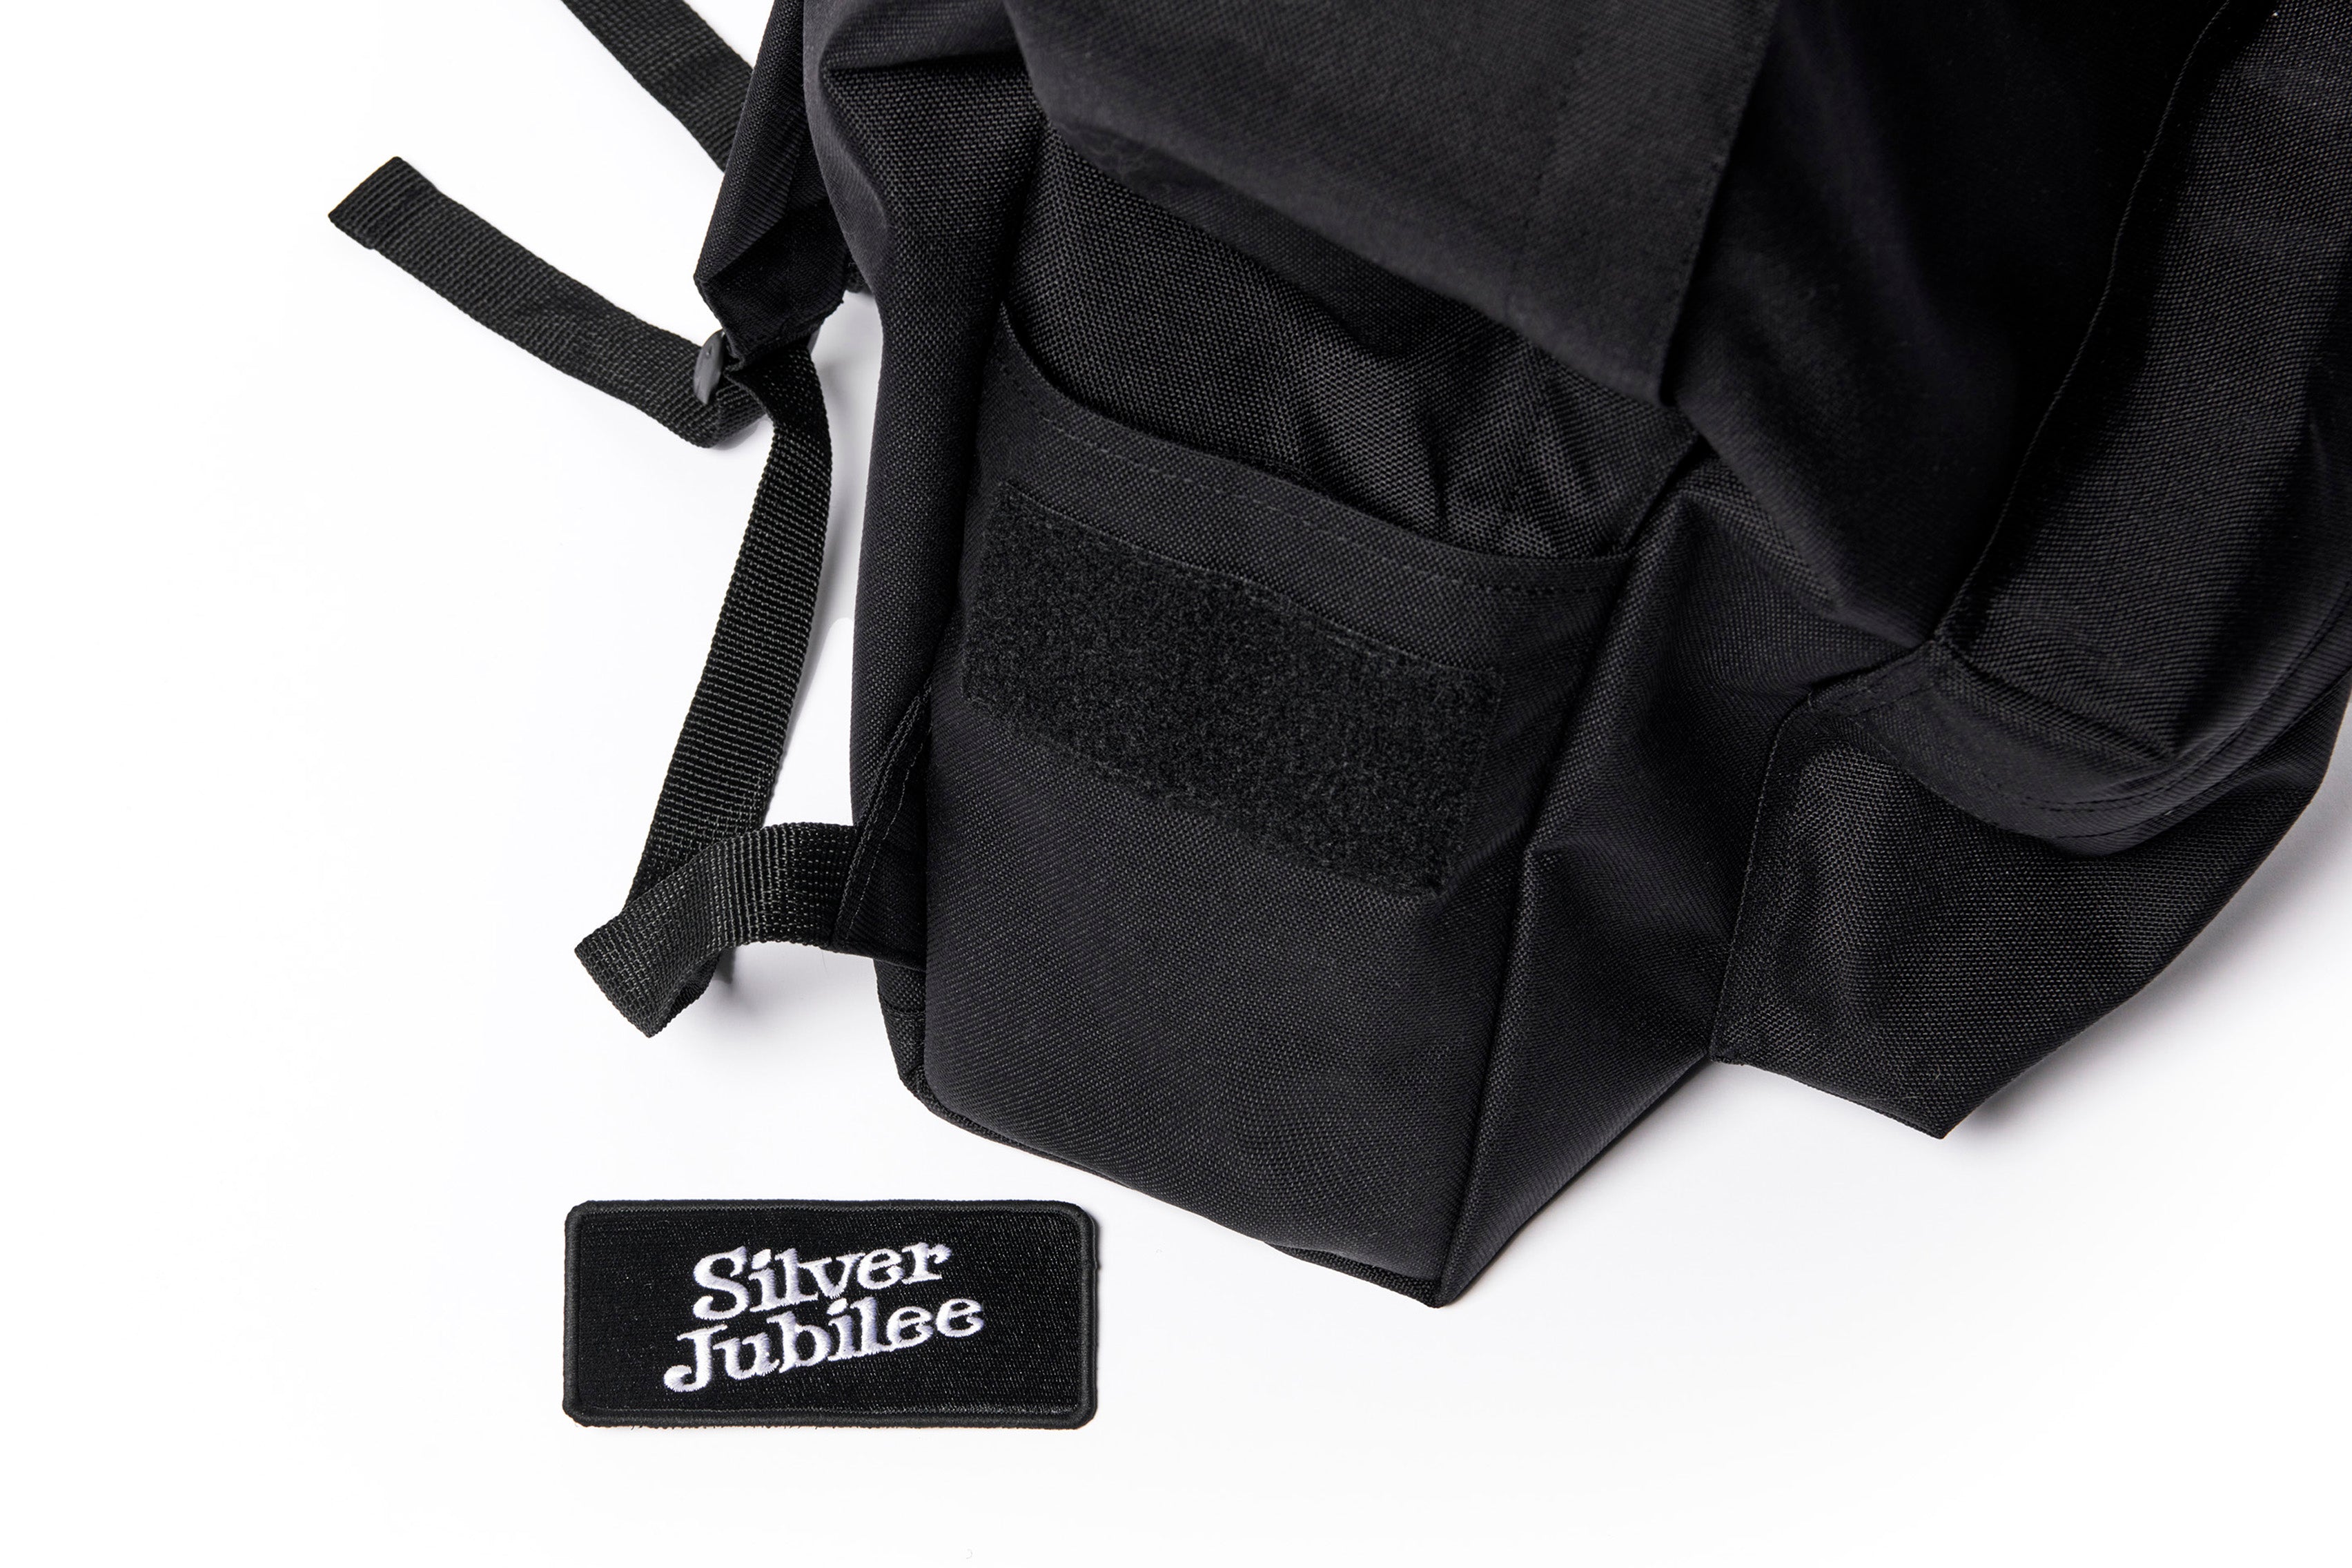 Silver Jubilee Backpack